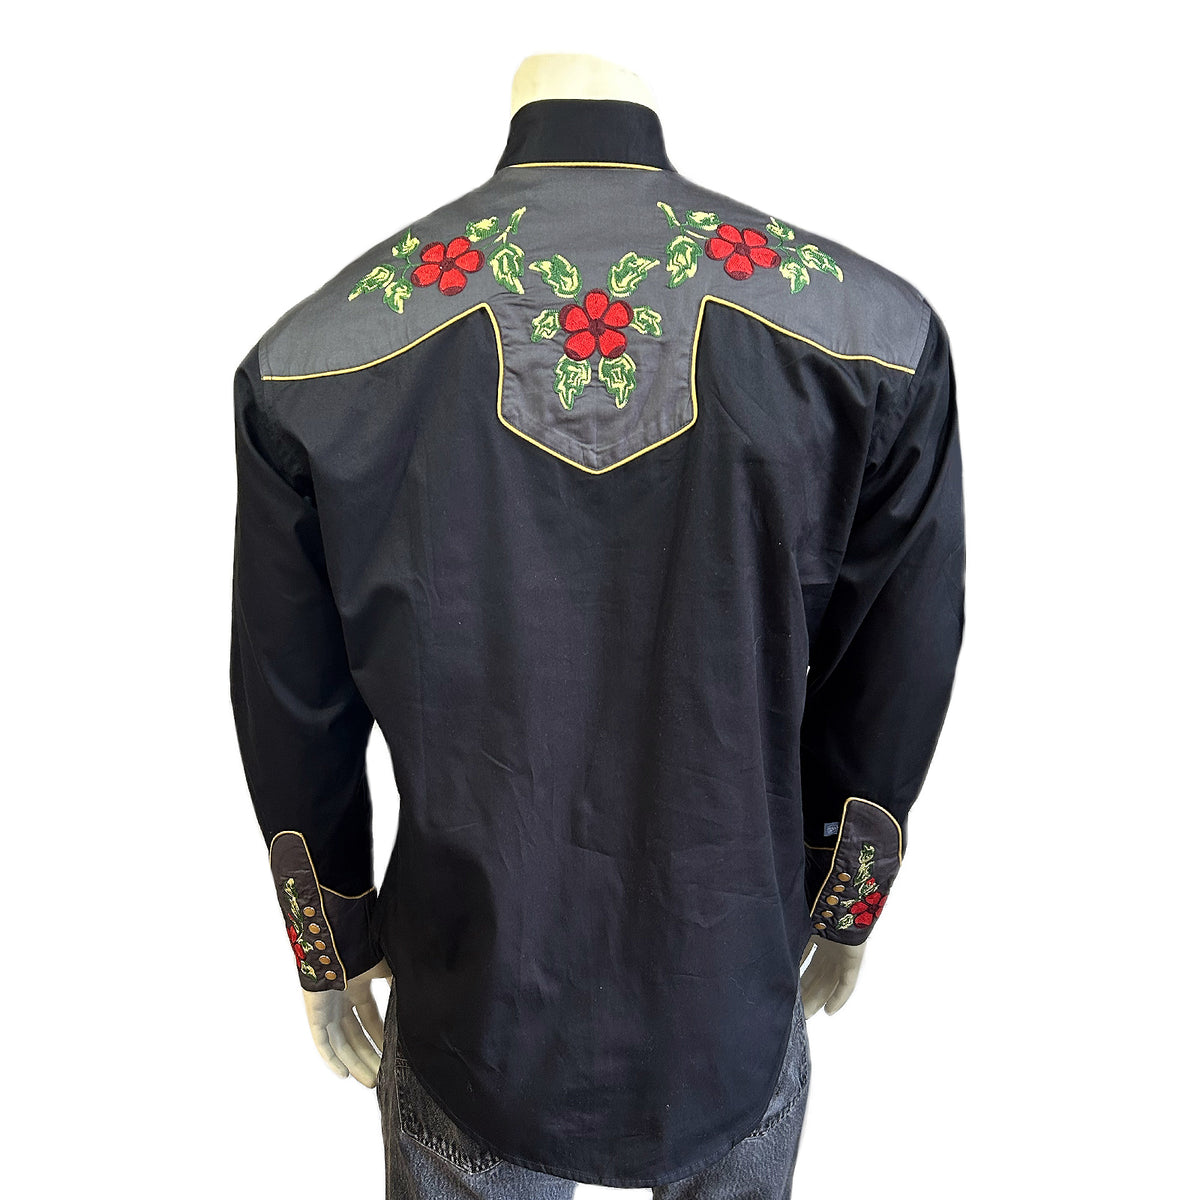 Men's Vintage 2-Tone Floral Embroidered Western Shirt in Black & Grey